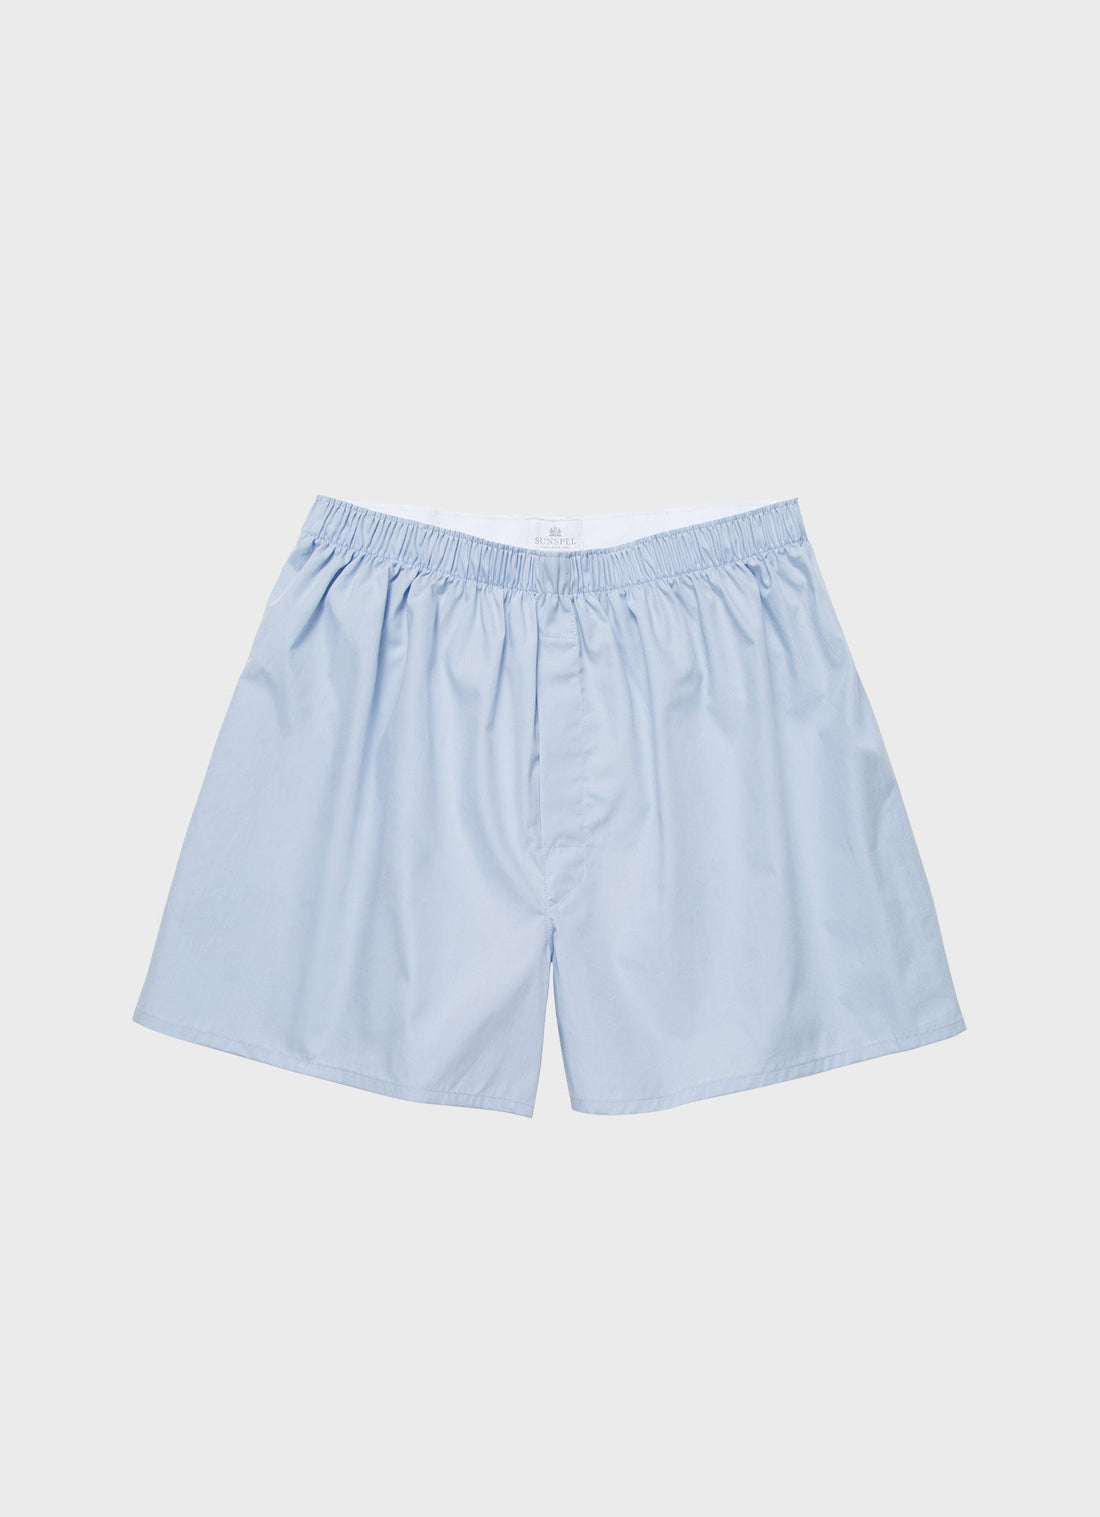 Sksloeg Mens Boxer Briefs Ultra Soft Modal Underpants Trunks Men's Short  Leg Underwear,Sky Blue,Hot Pink,Dark Blue 2XL (3 Pack) 